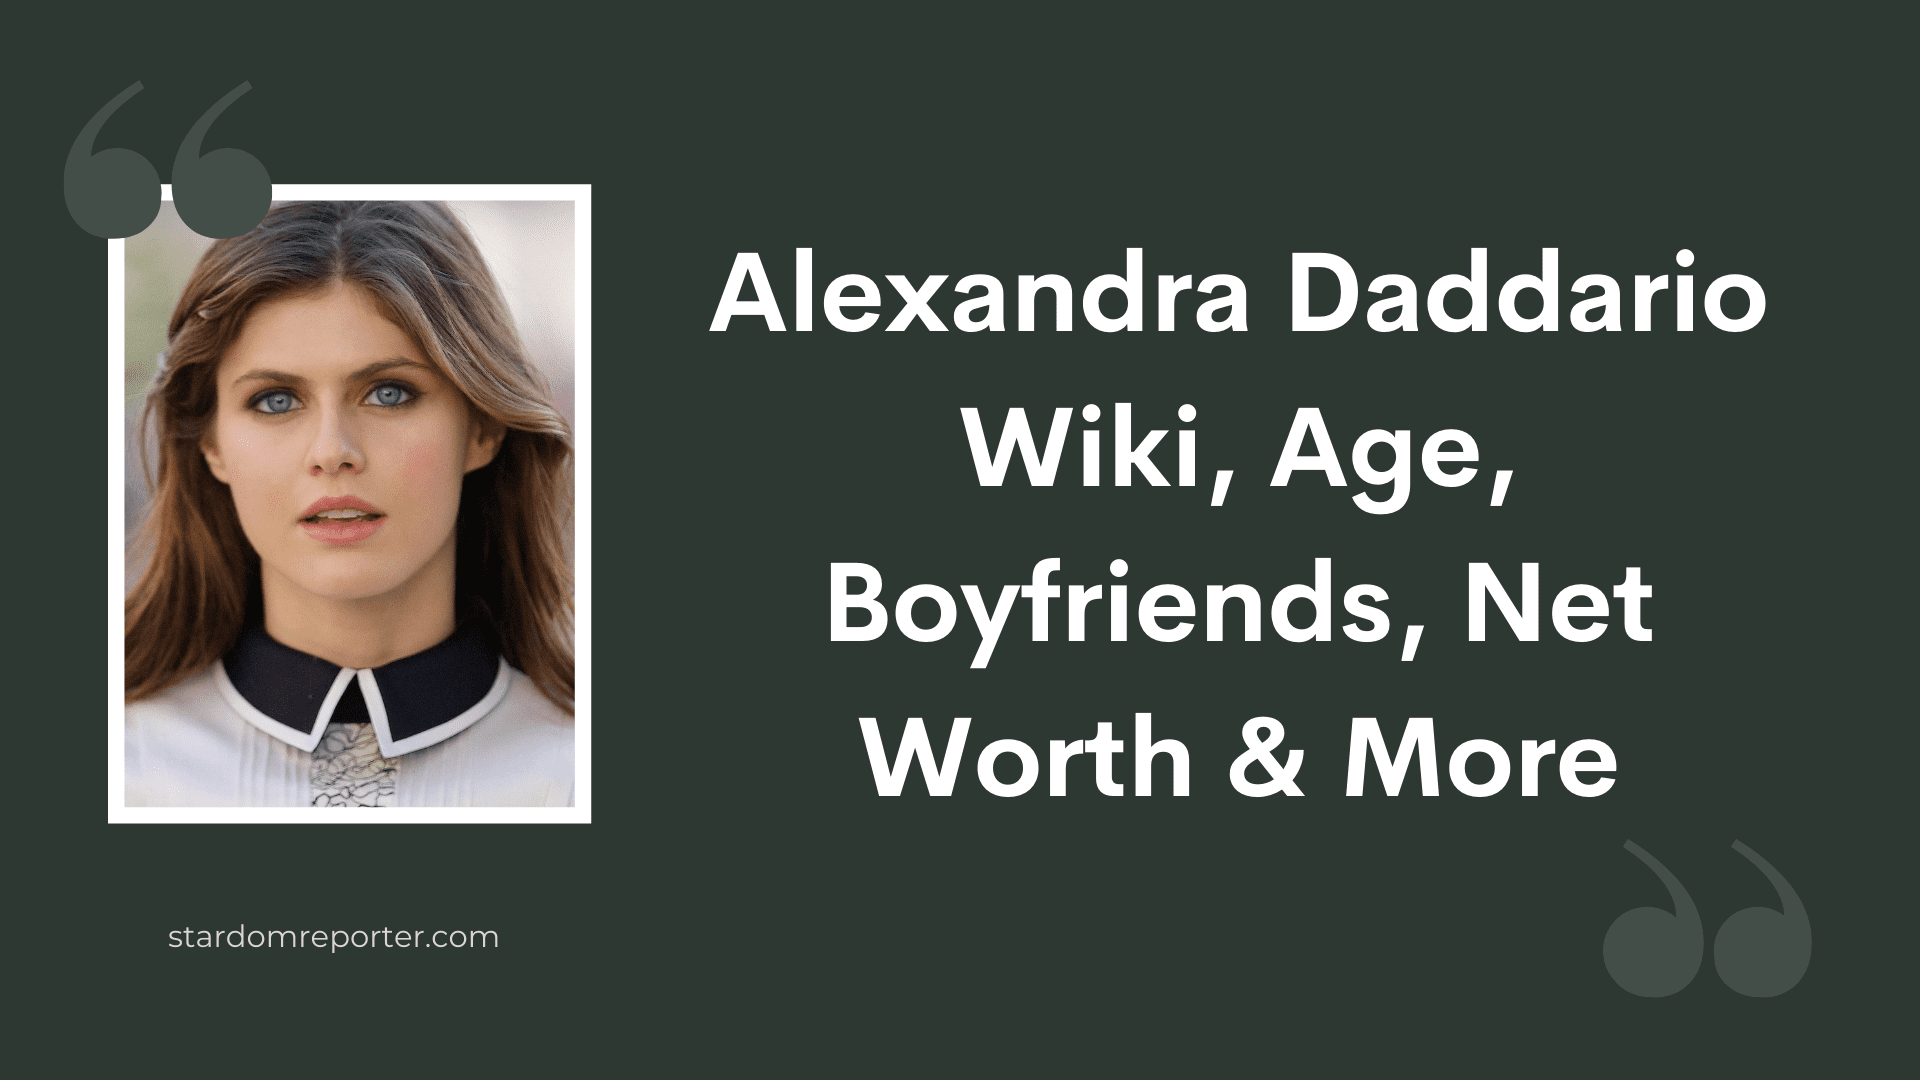 Alexandra Daddario Wiki, Age, Boyfriends, Net Worth & More - 31